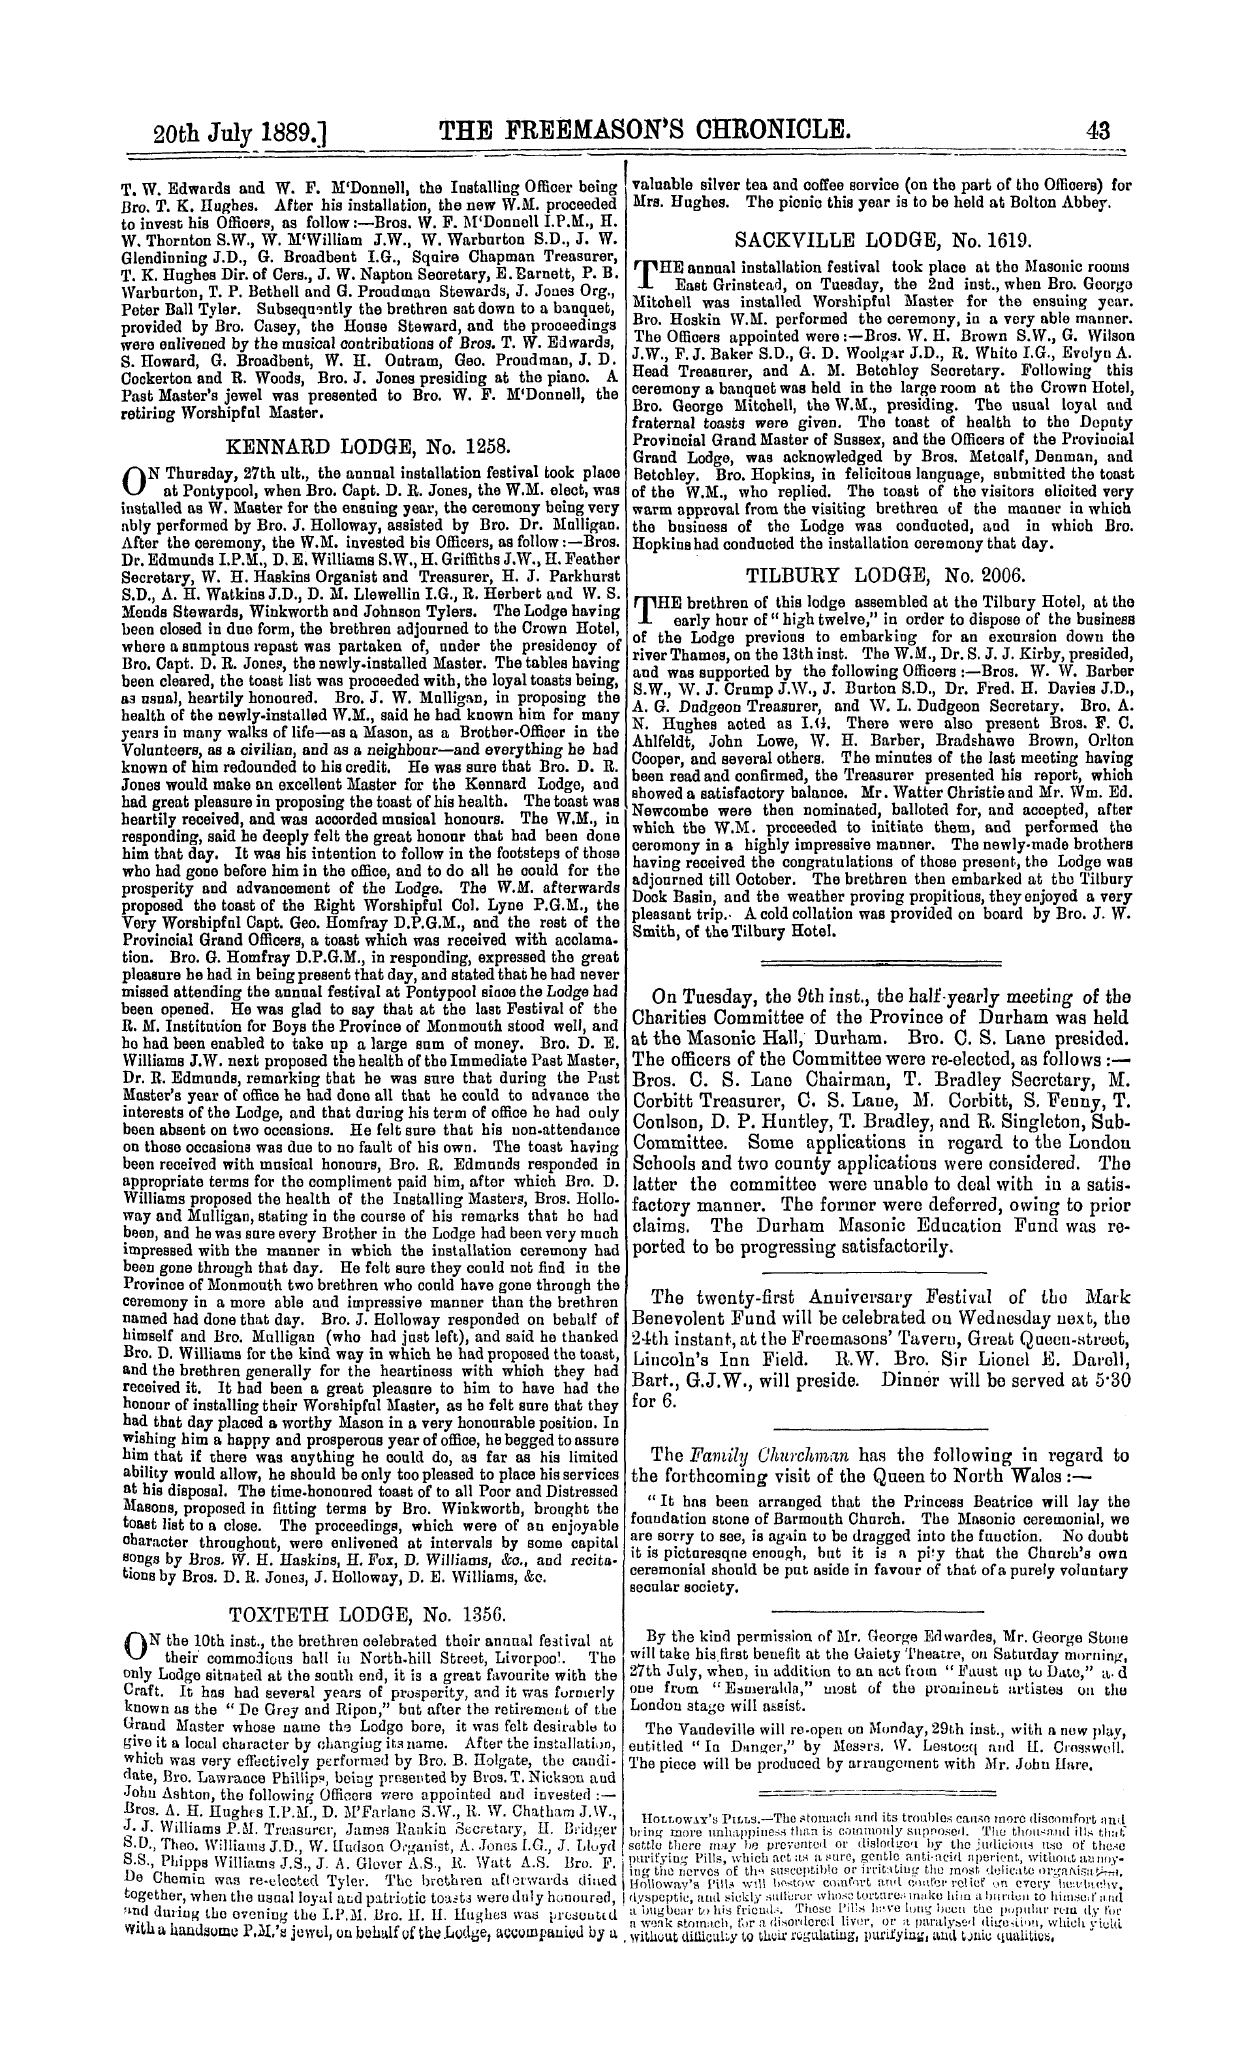 The Freemason's Chronicle: 1889-07-20: 11